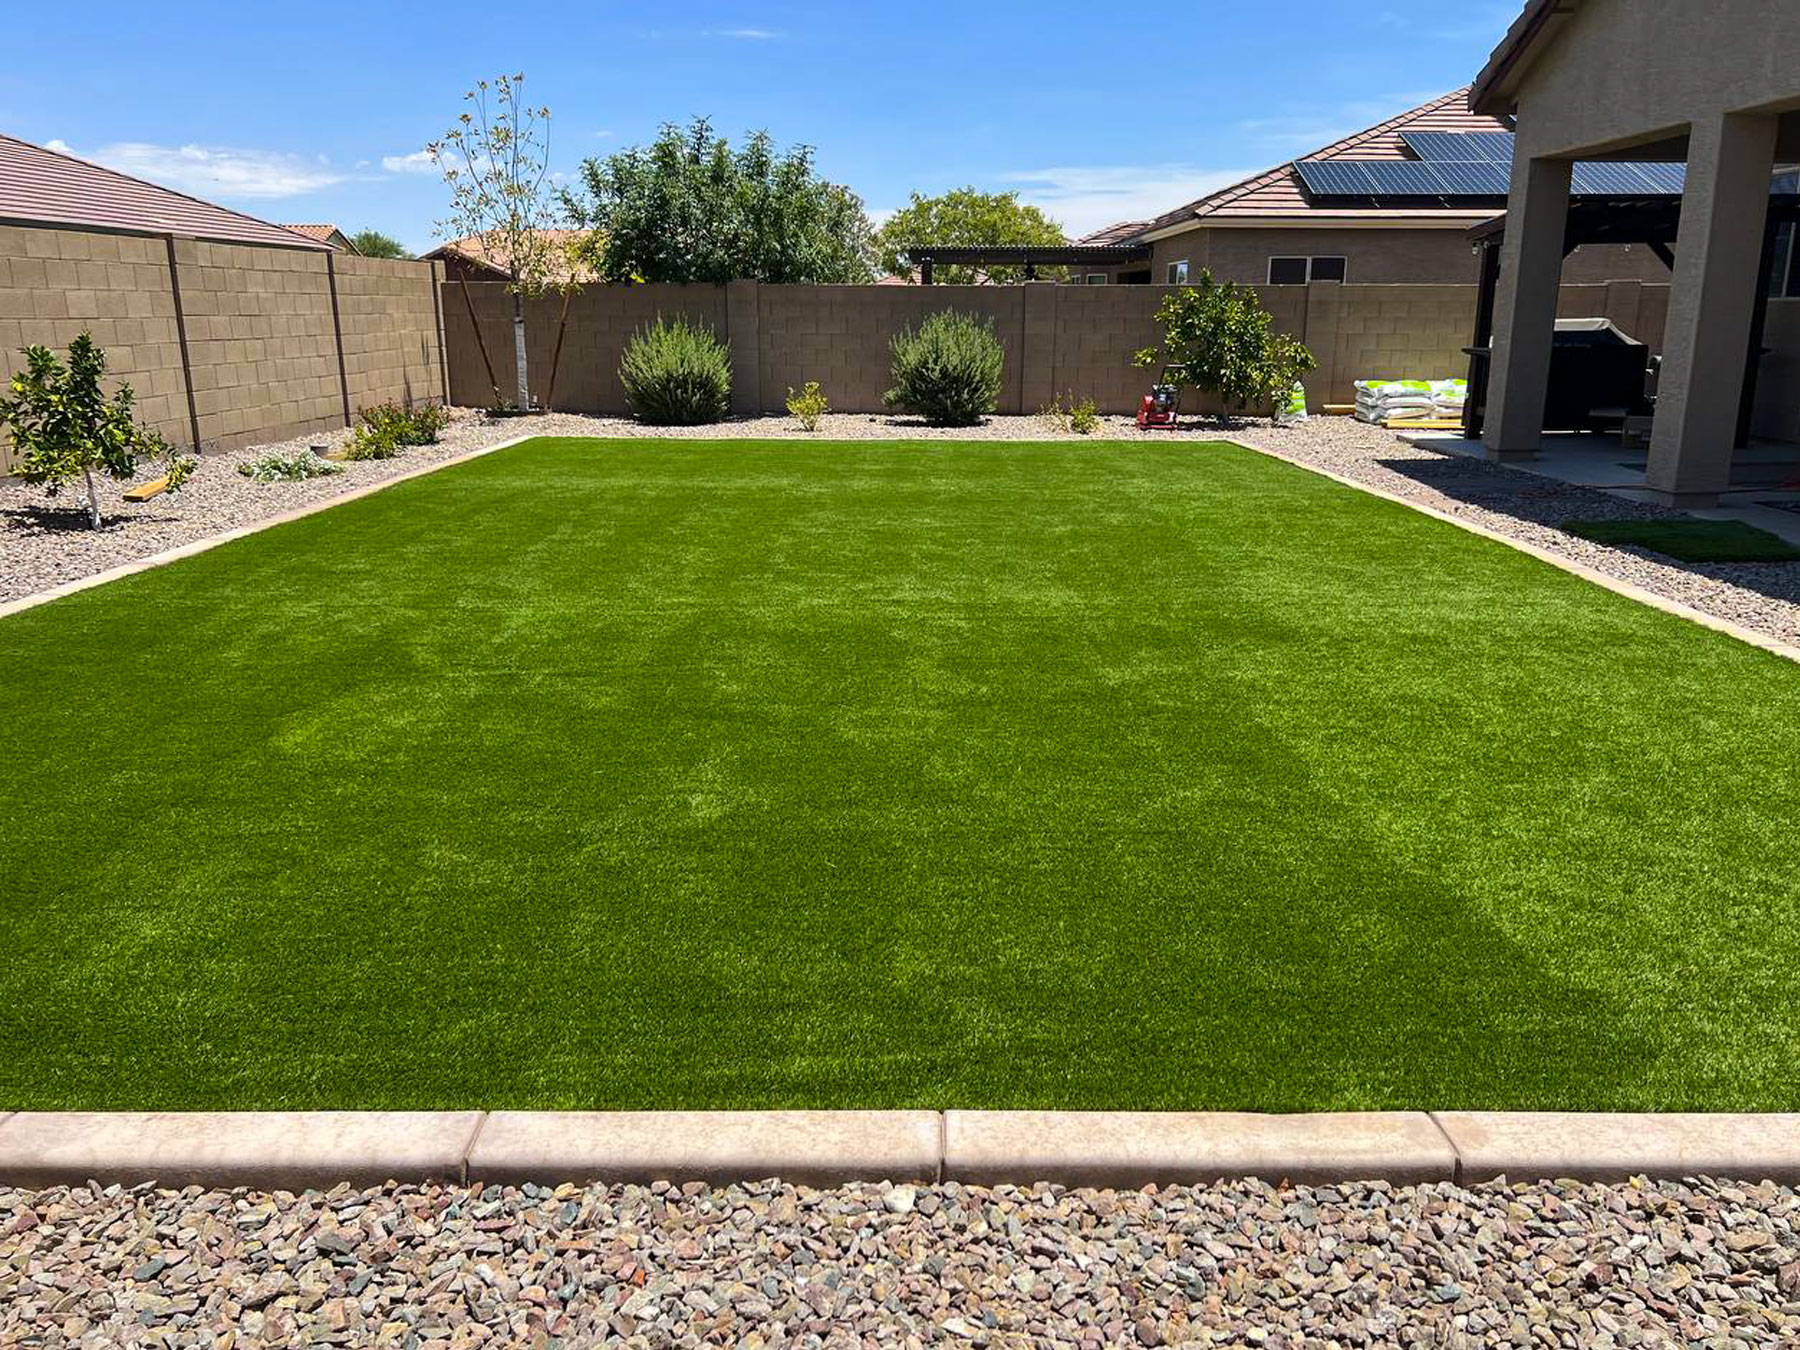 Phoenix, AZ Super Natural-80 artificial grass synthetic turf installation